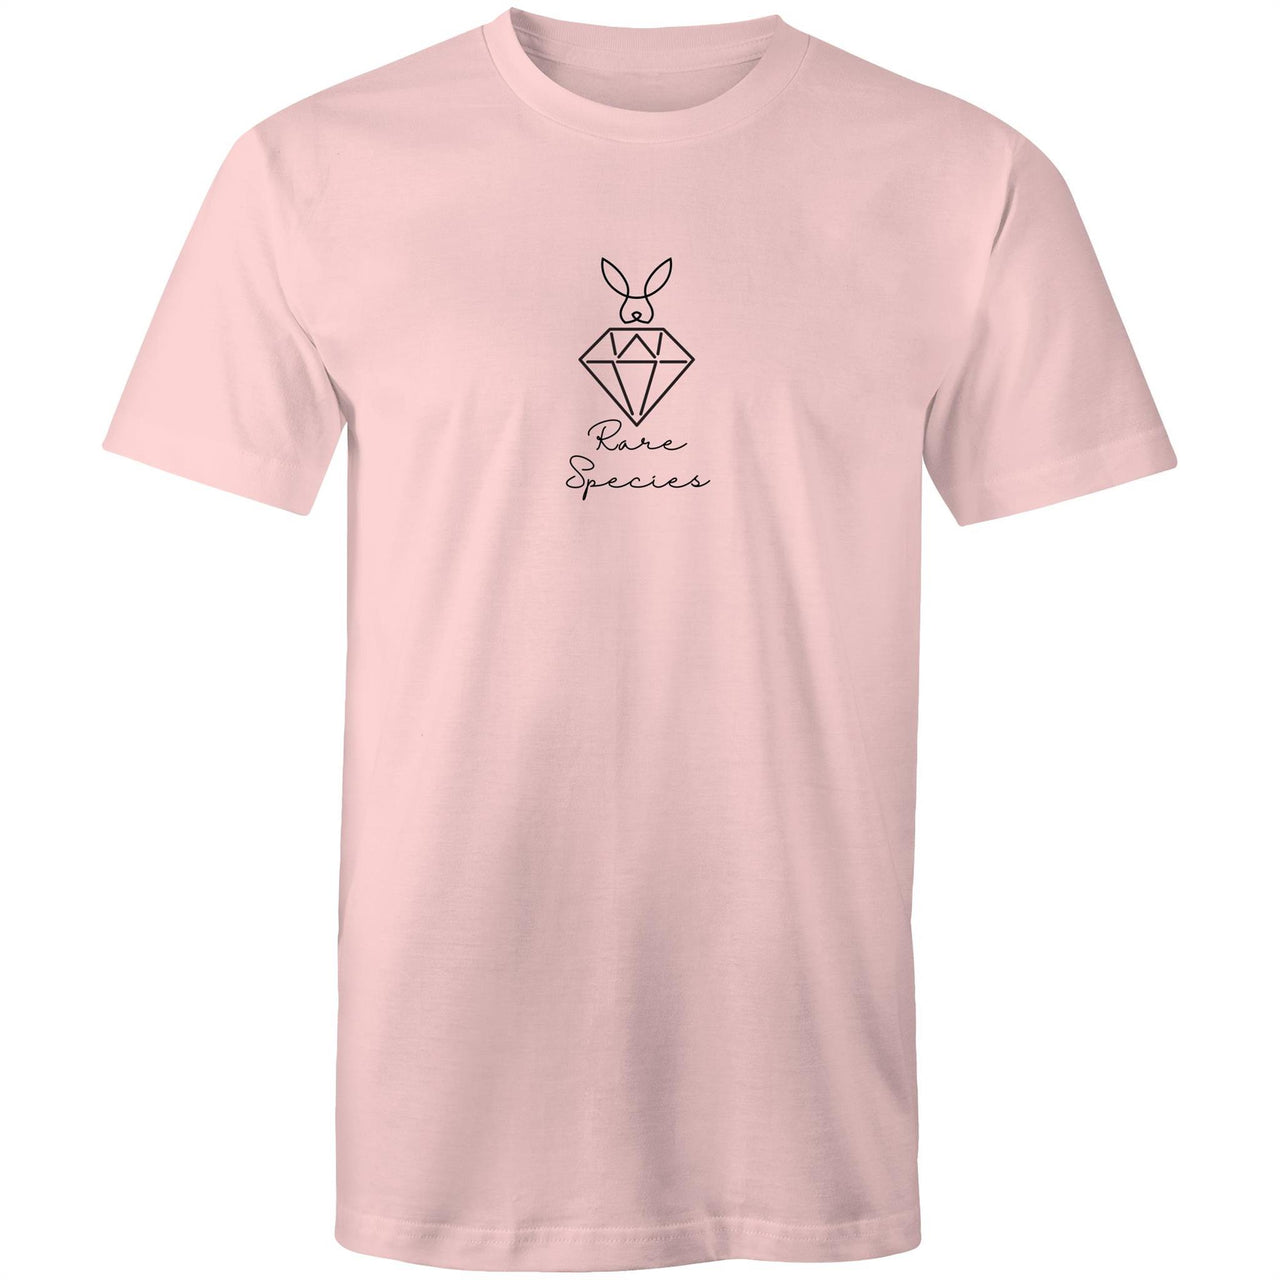 CBF Rare Species Crew T-Shirt pink by CBF Clothing